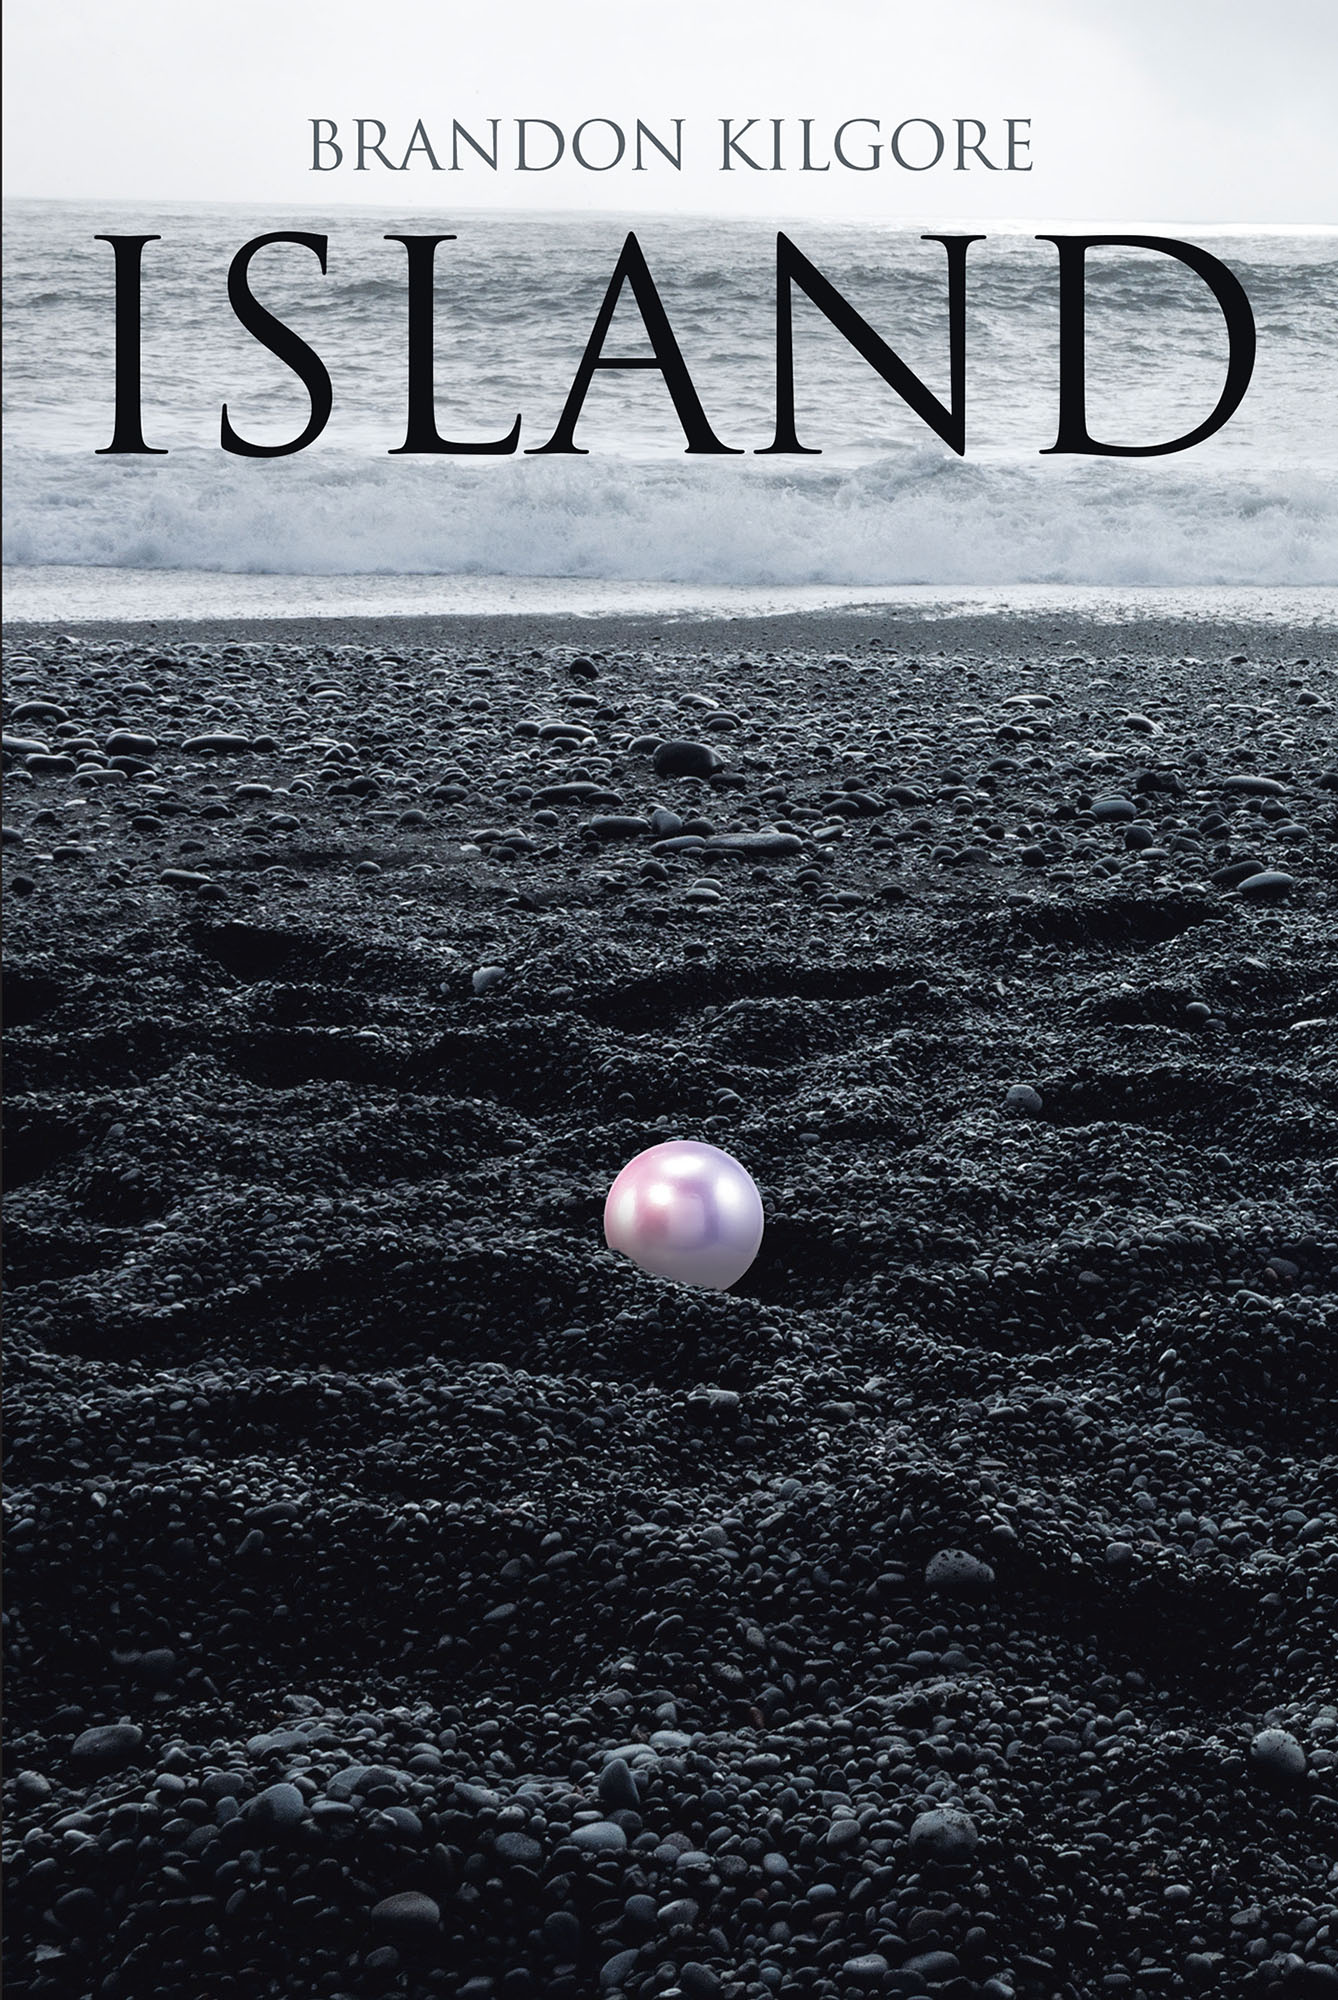 Island Cover Image